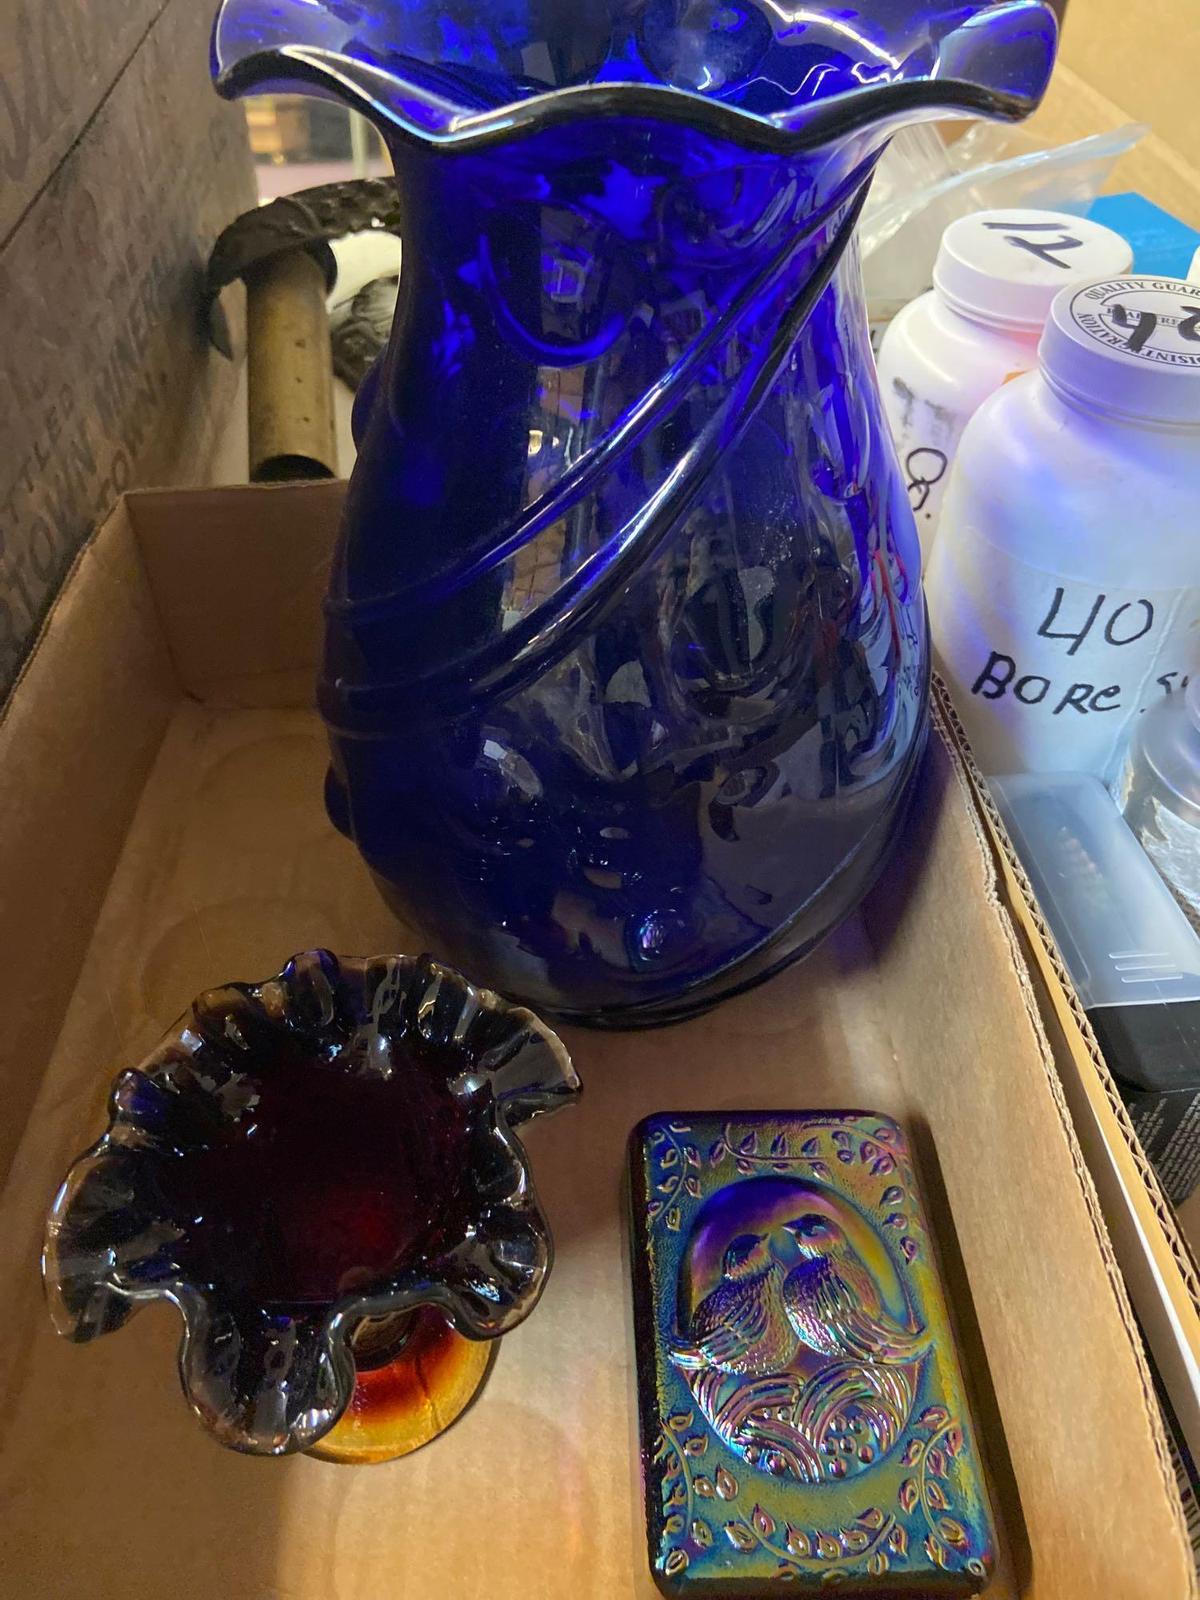 Fenton Amberina vase, Lovebird paperweight, large colbalt vase